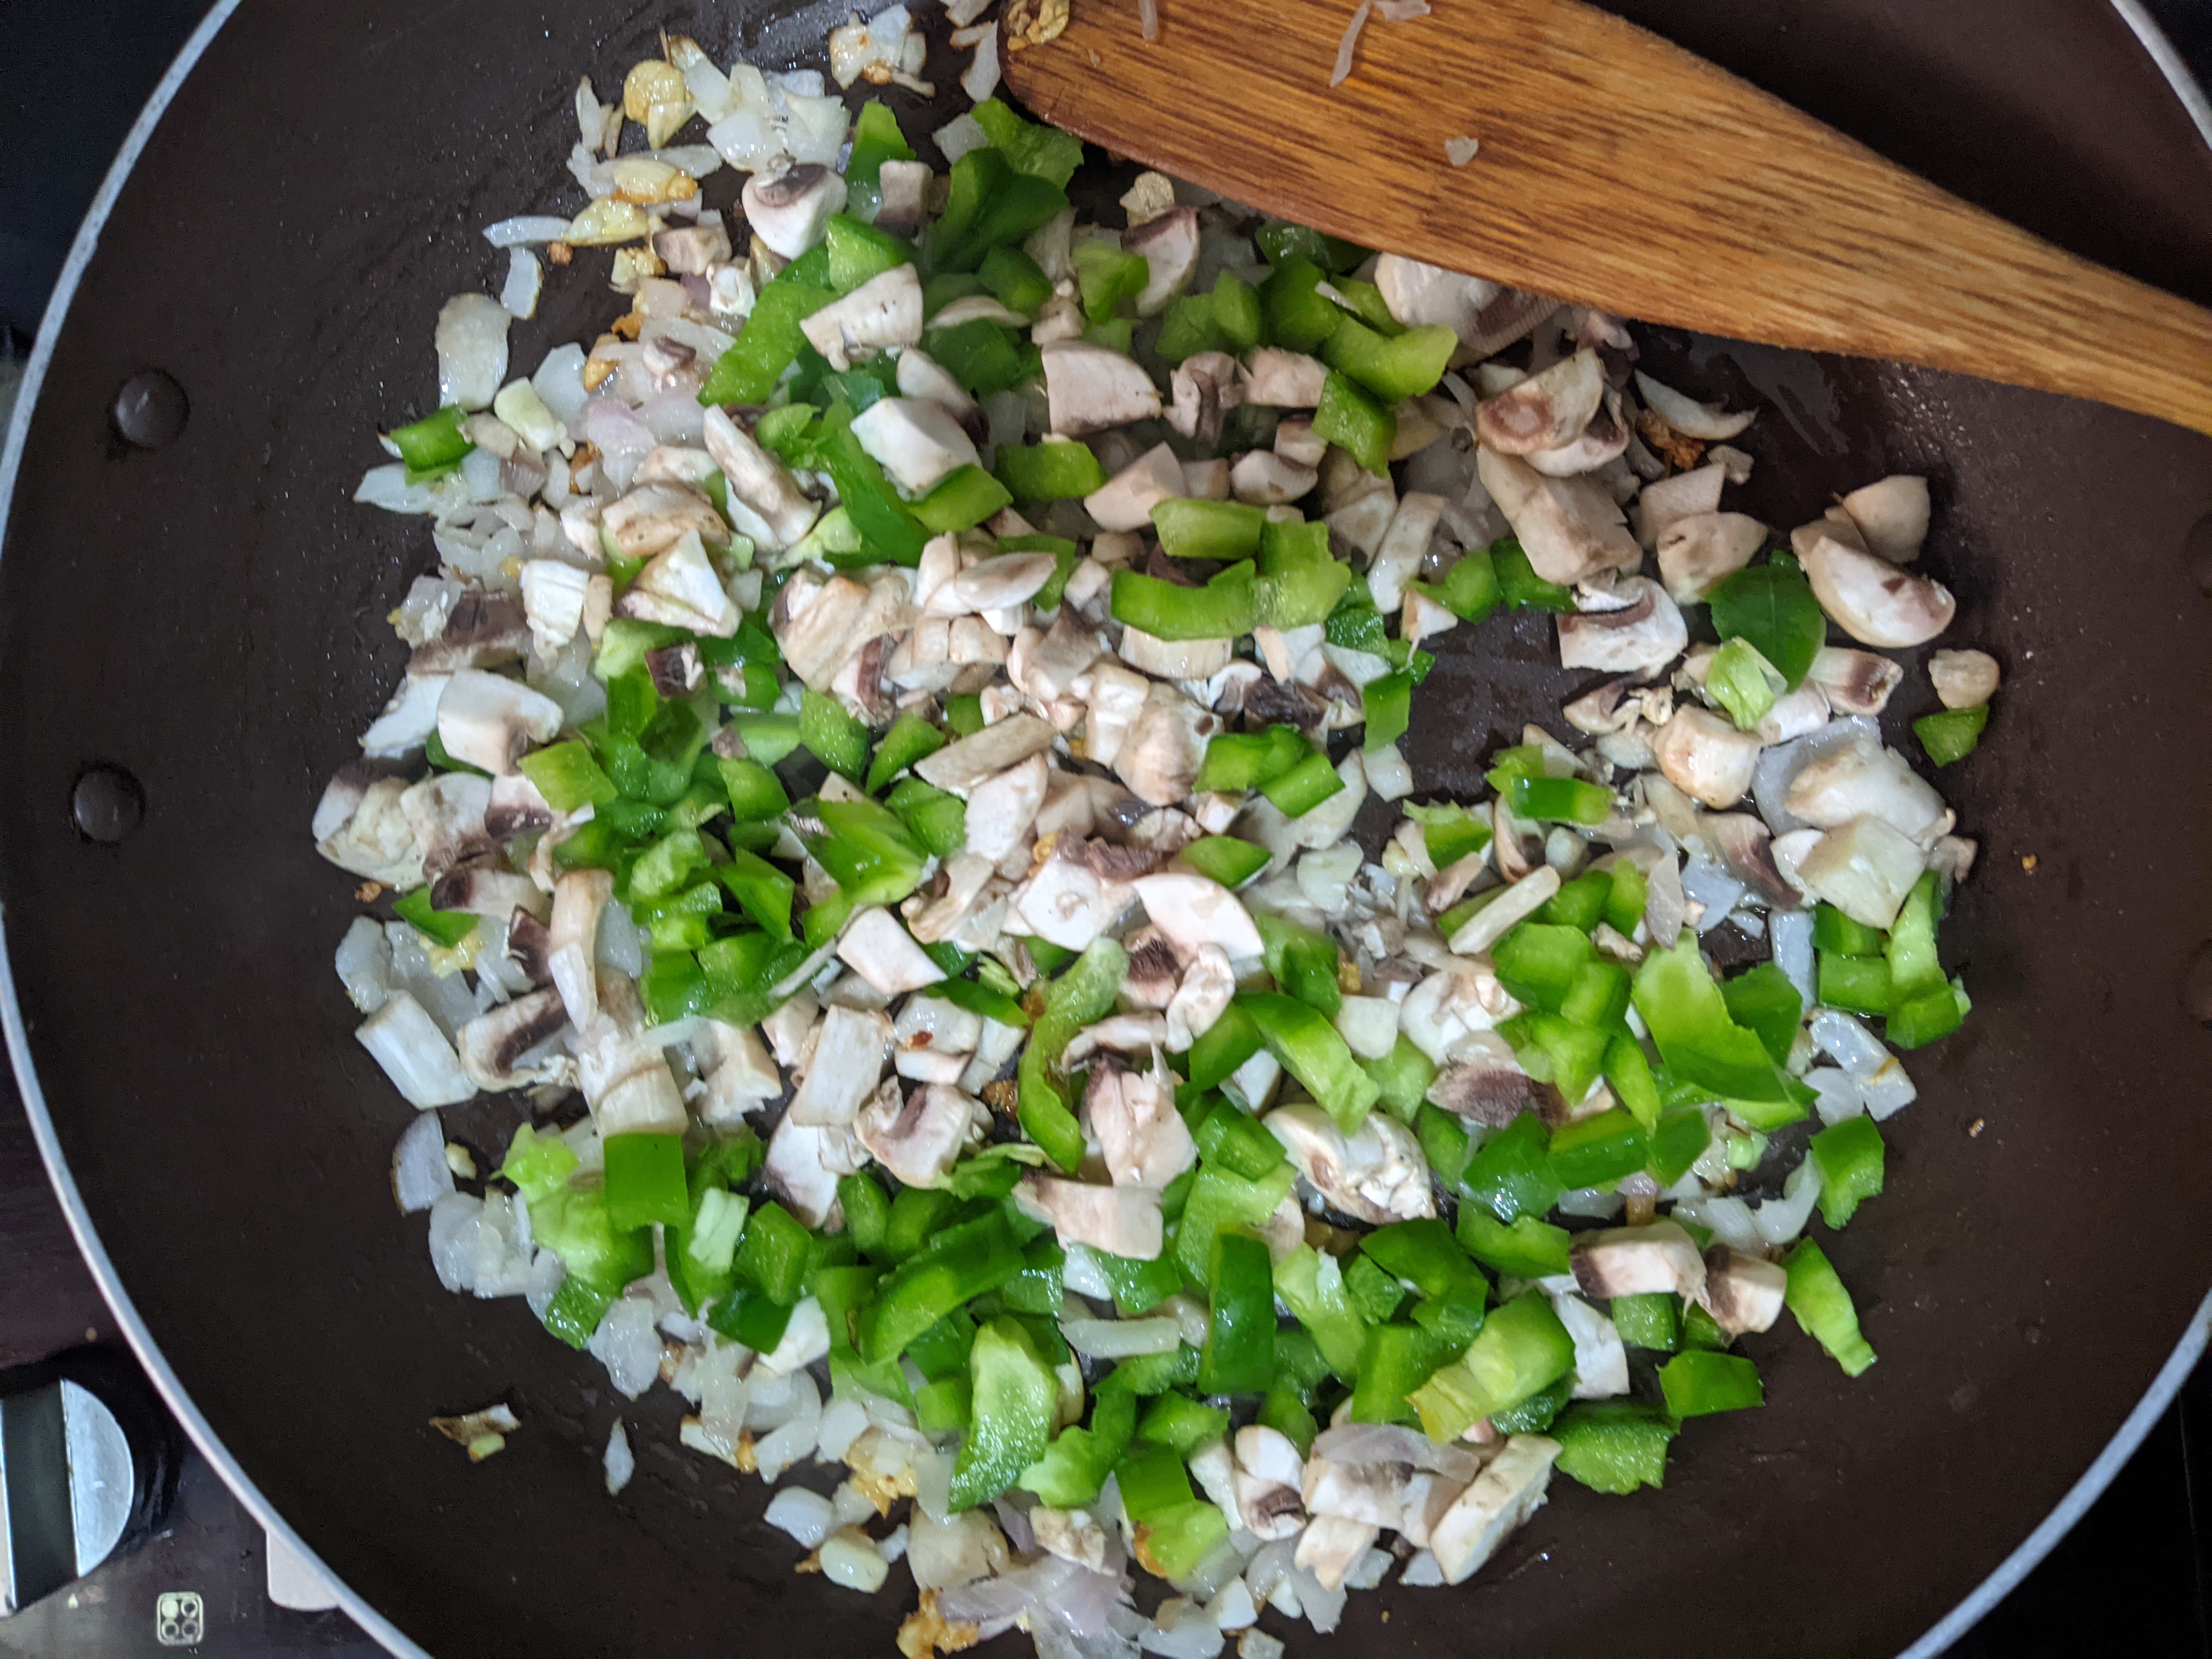 sautéing veggies in a pan